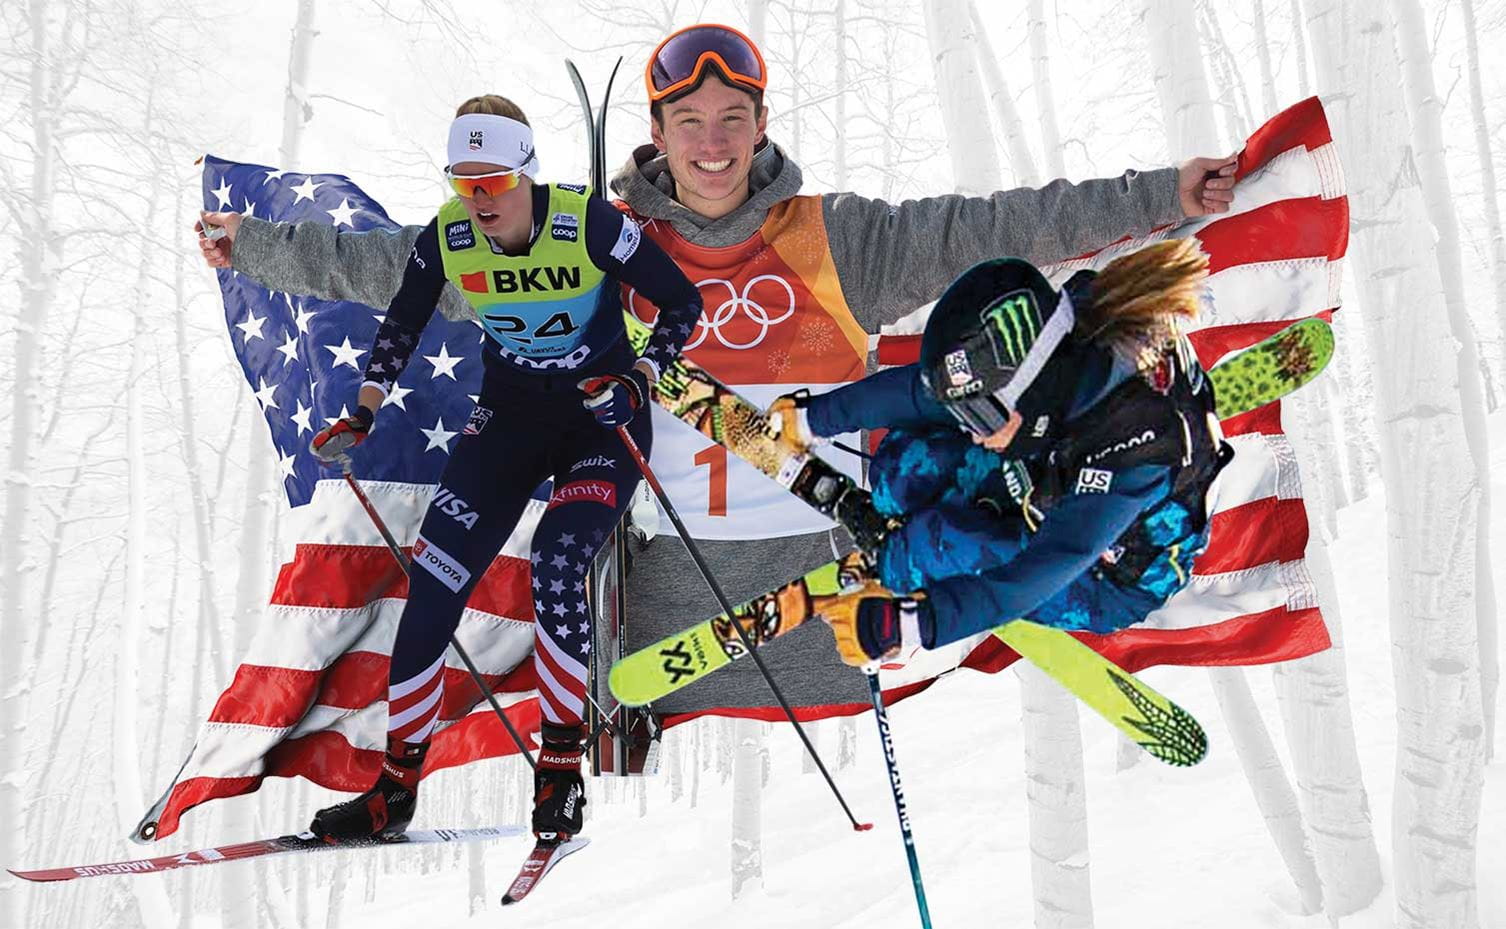 Meet Aspen's Olympic athletes representing the U.S. in Beijing 2022